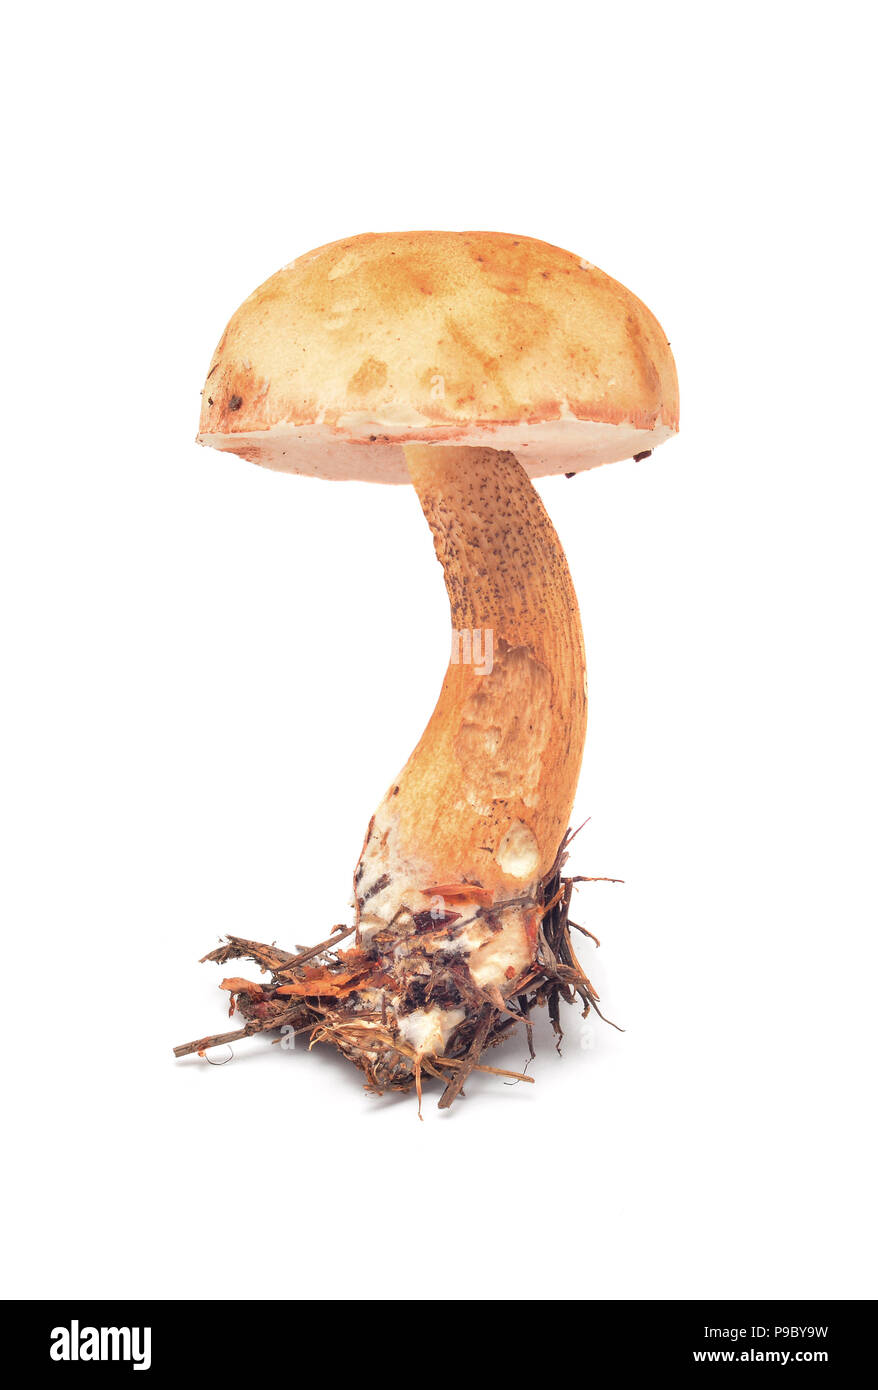 tylopilus felleus mushroom isolated on white Stock Photo